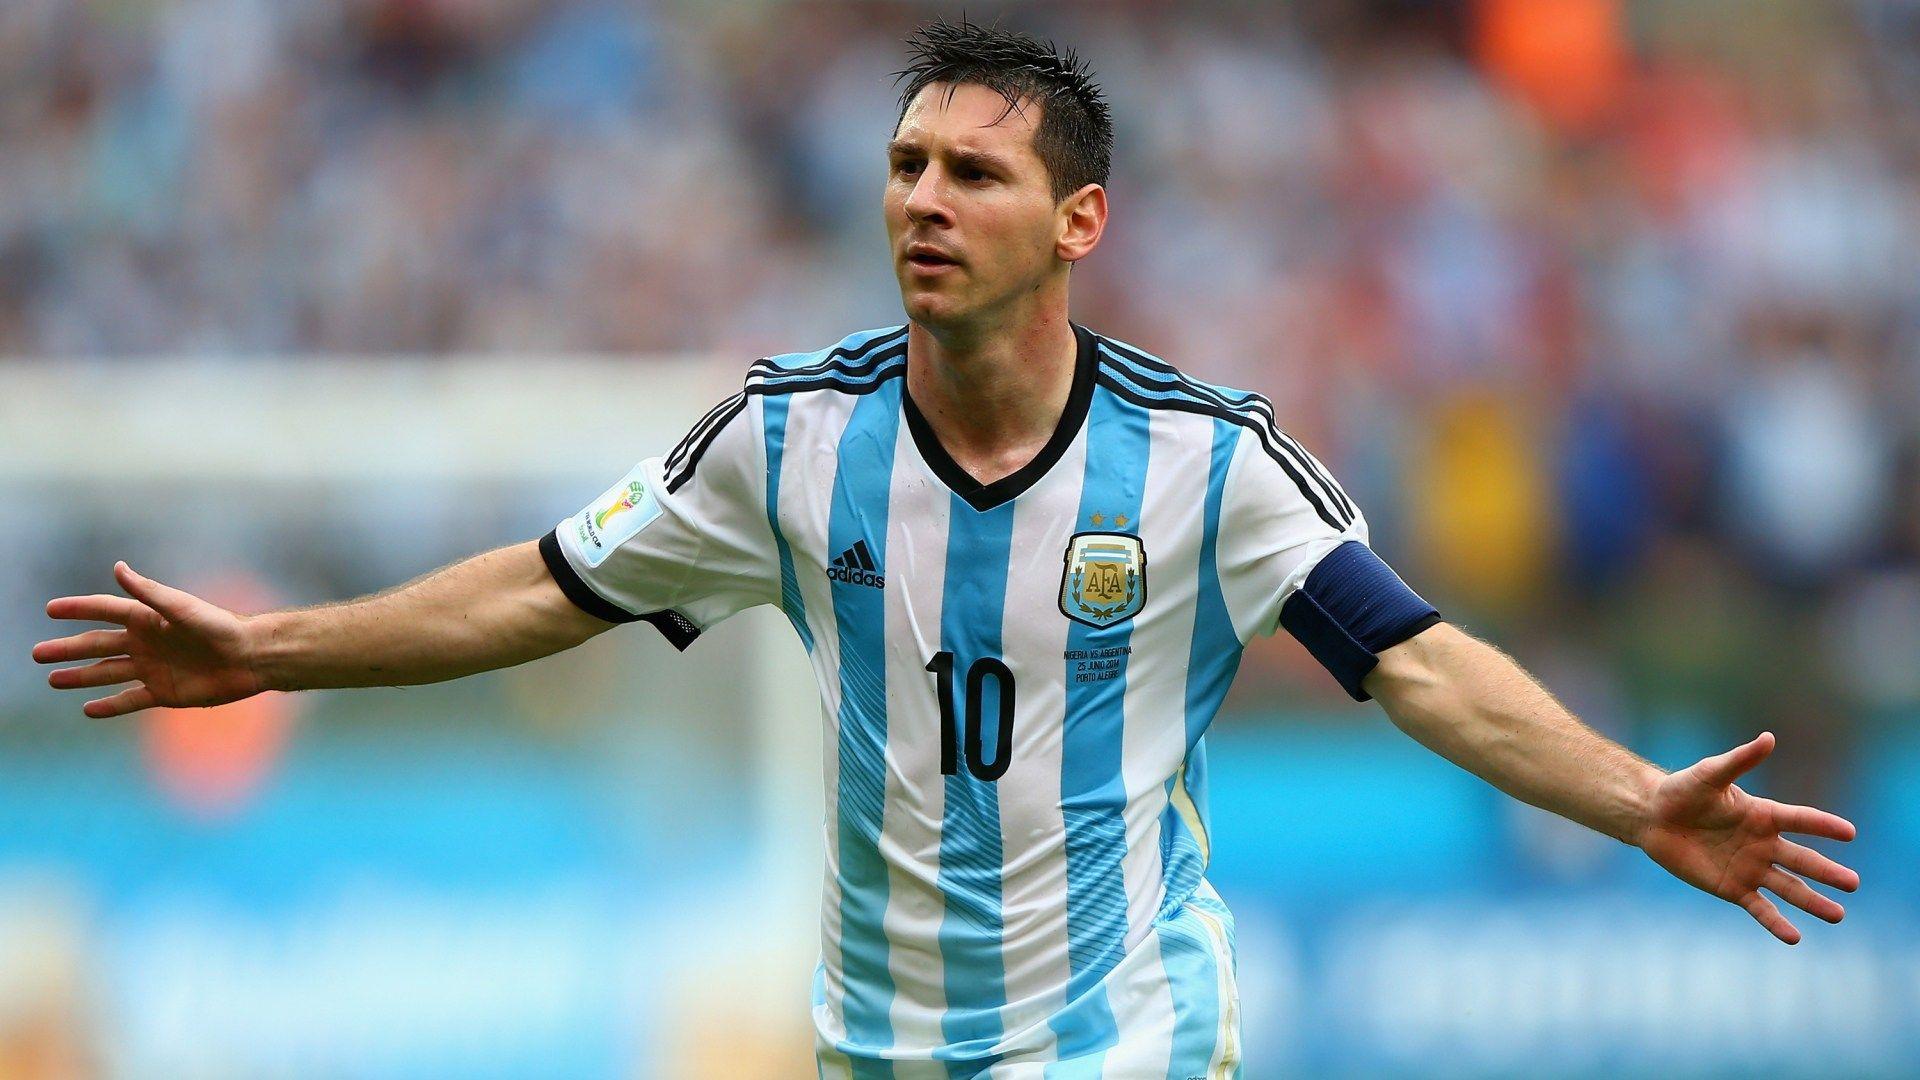 Messi Argentina Wallpapers - Top 35 Best Messi Argentina Wallpapers Download